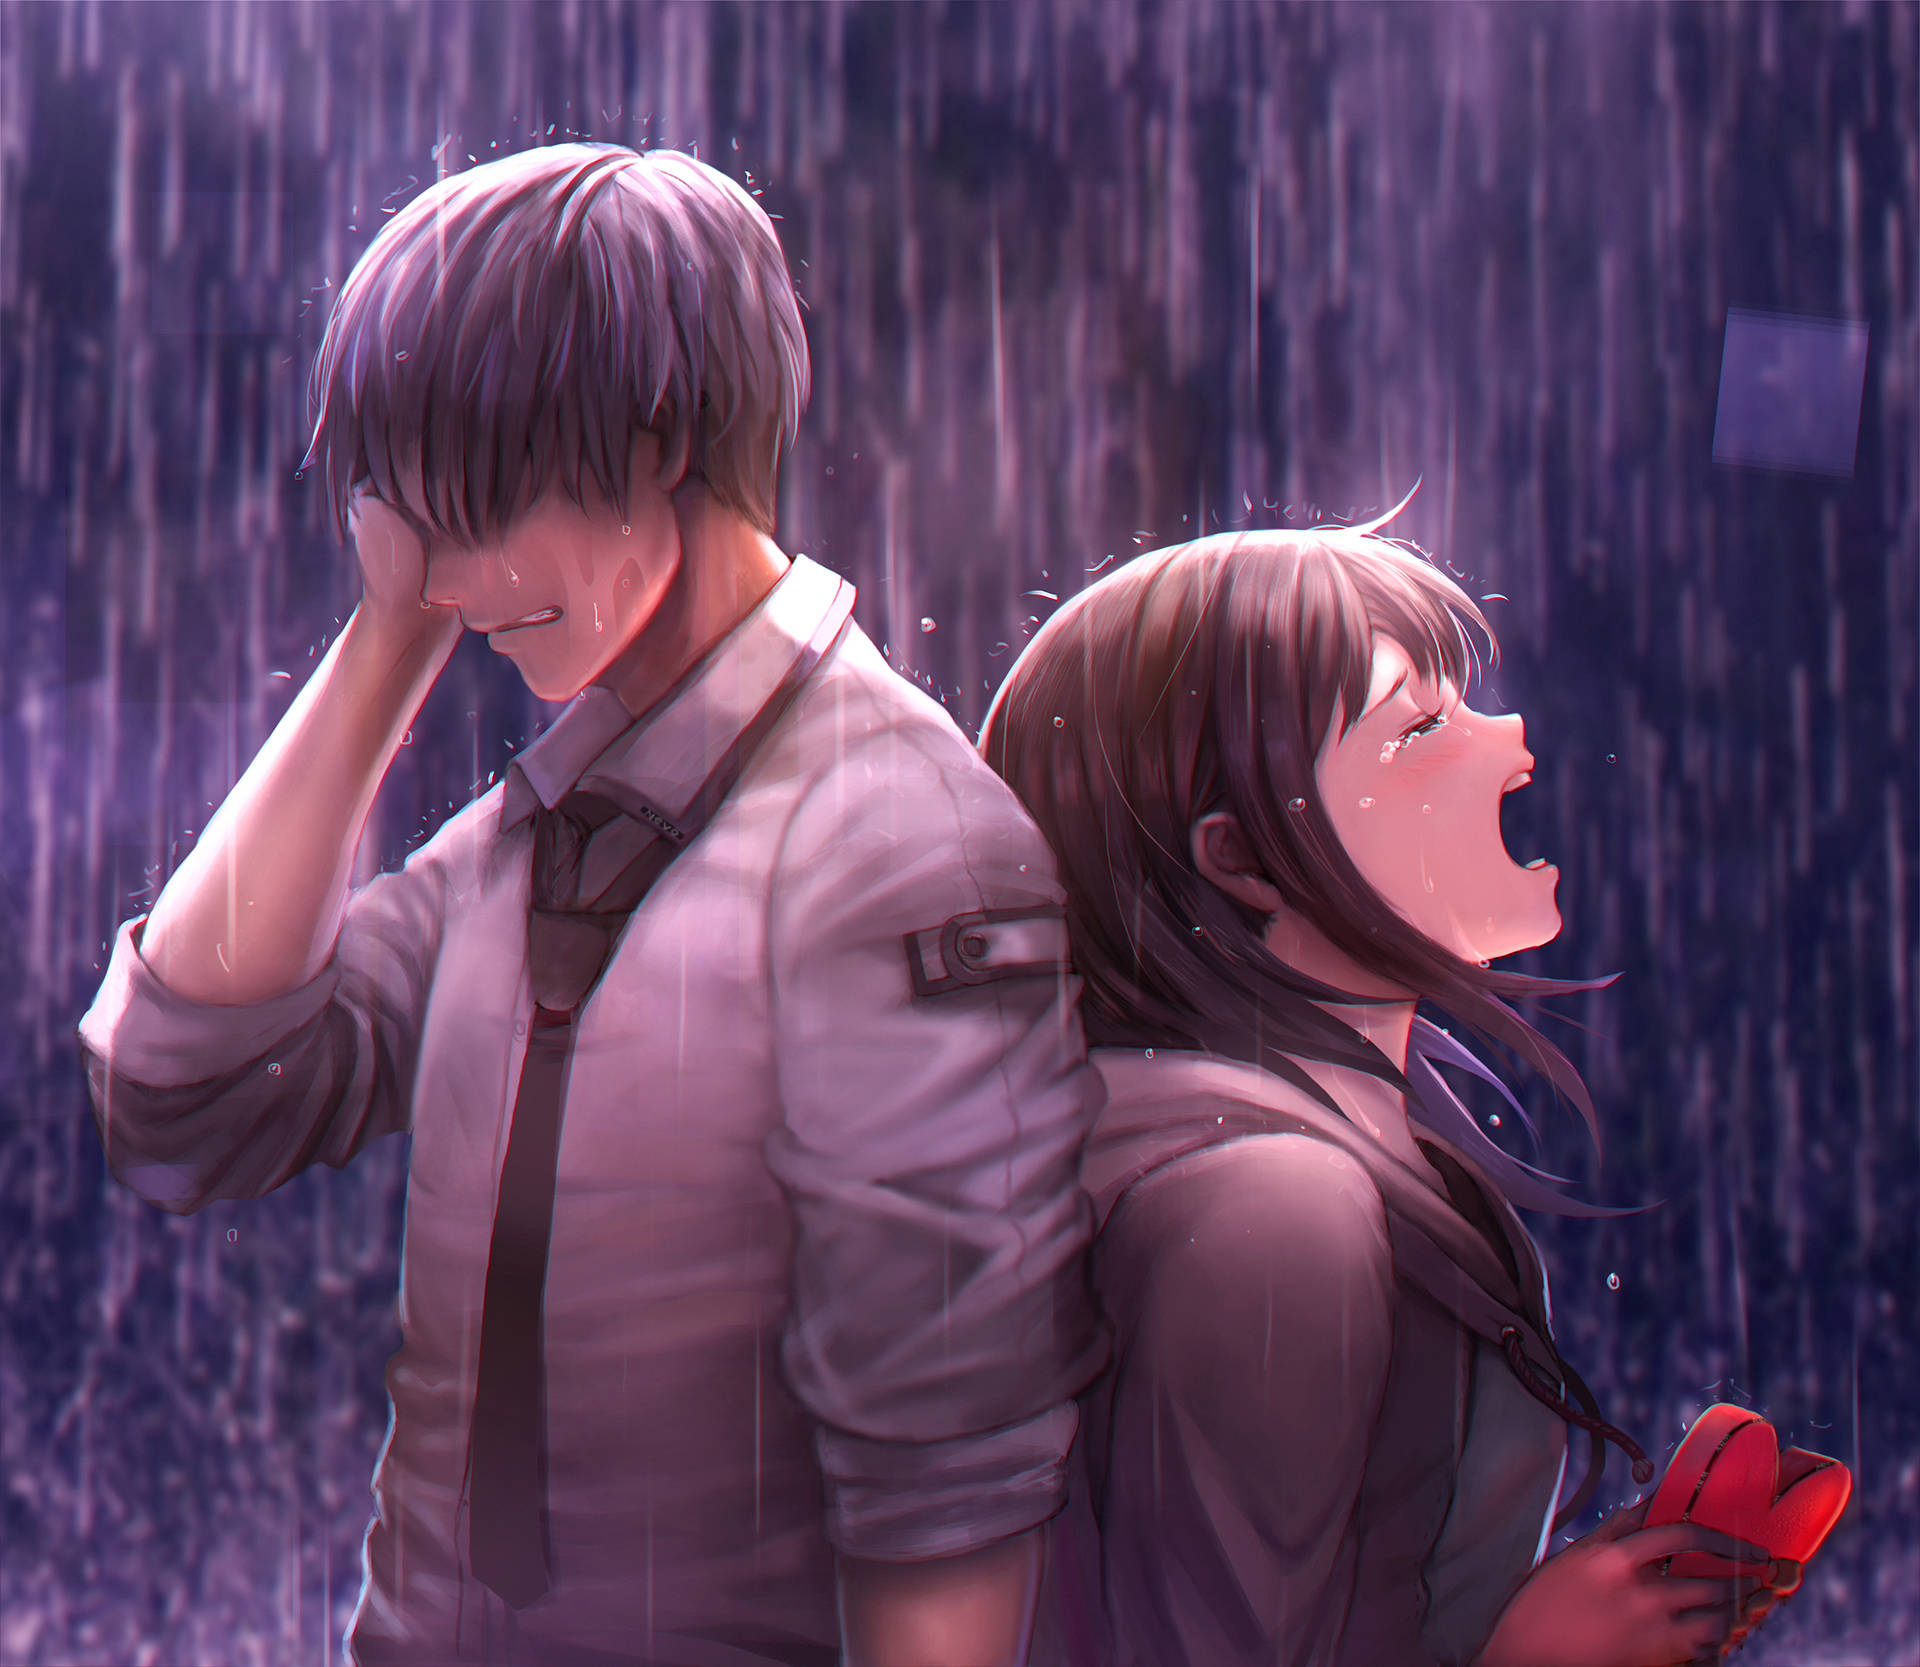 Sad Anime Boy And Girl Background